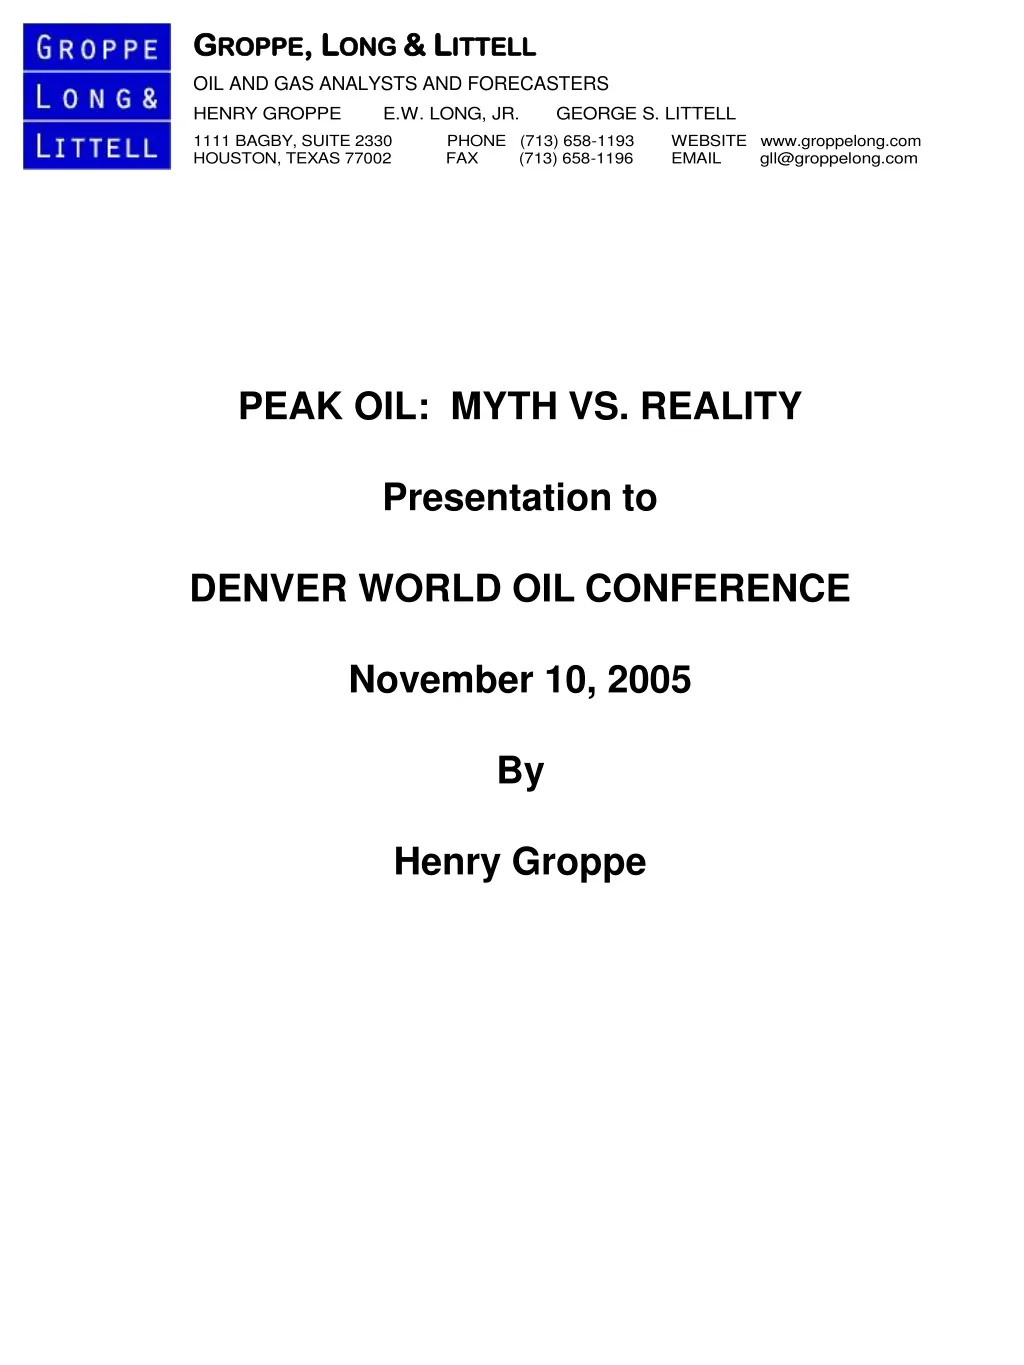 peak oil myth vs reality presentation to denver